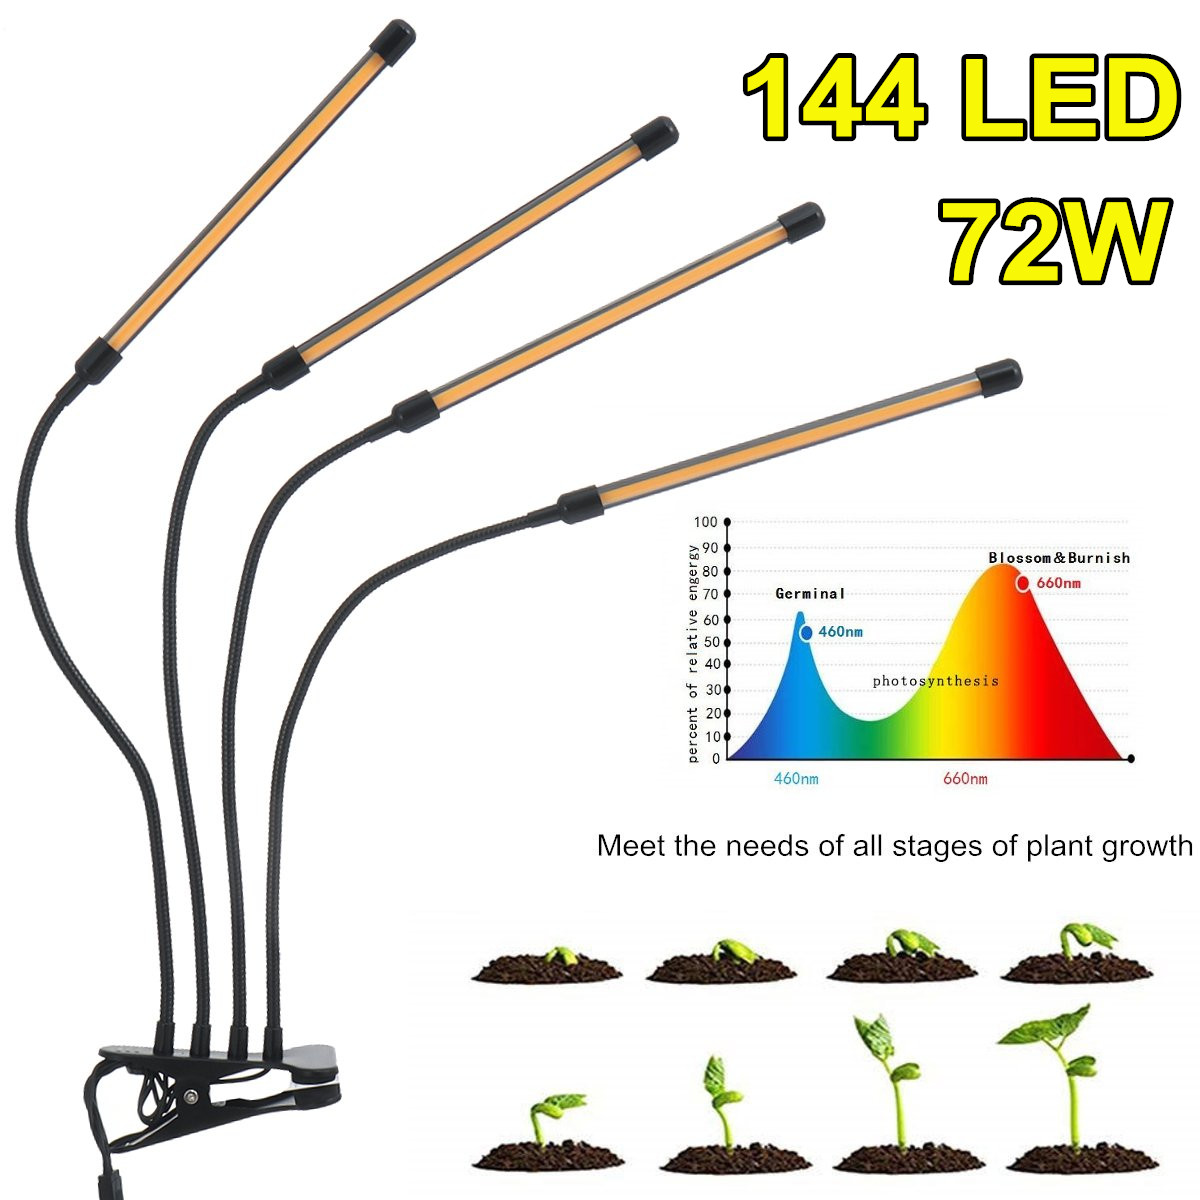 4-Head-144-LED-72W-Plant-Flower-Grow-Light-Lamp-Hydroponics-Full-Spectrum-USB-1727662-2